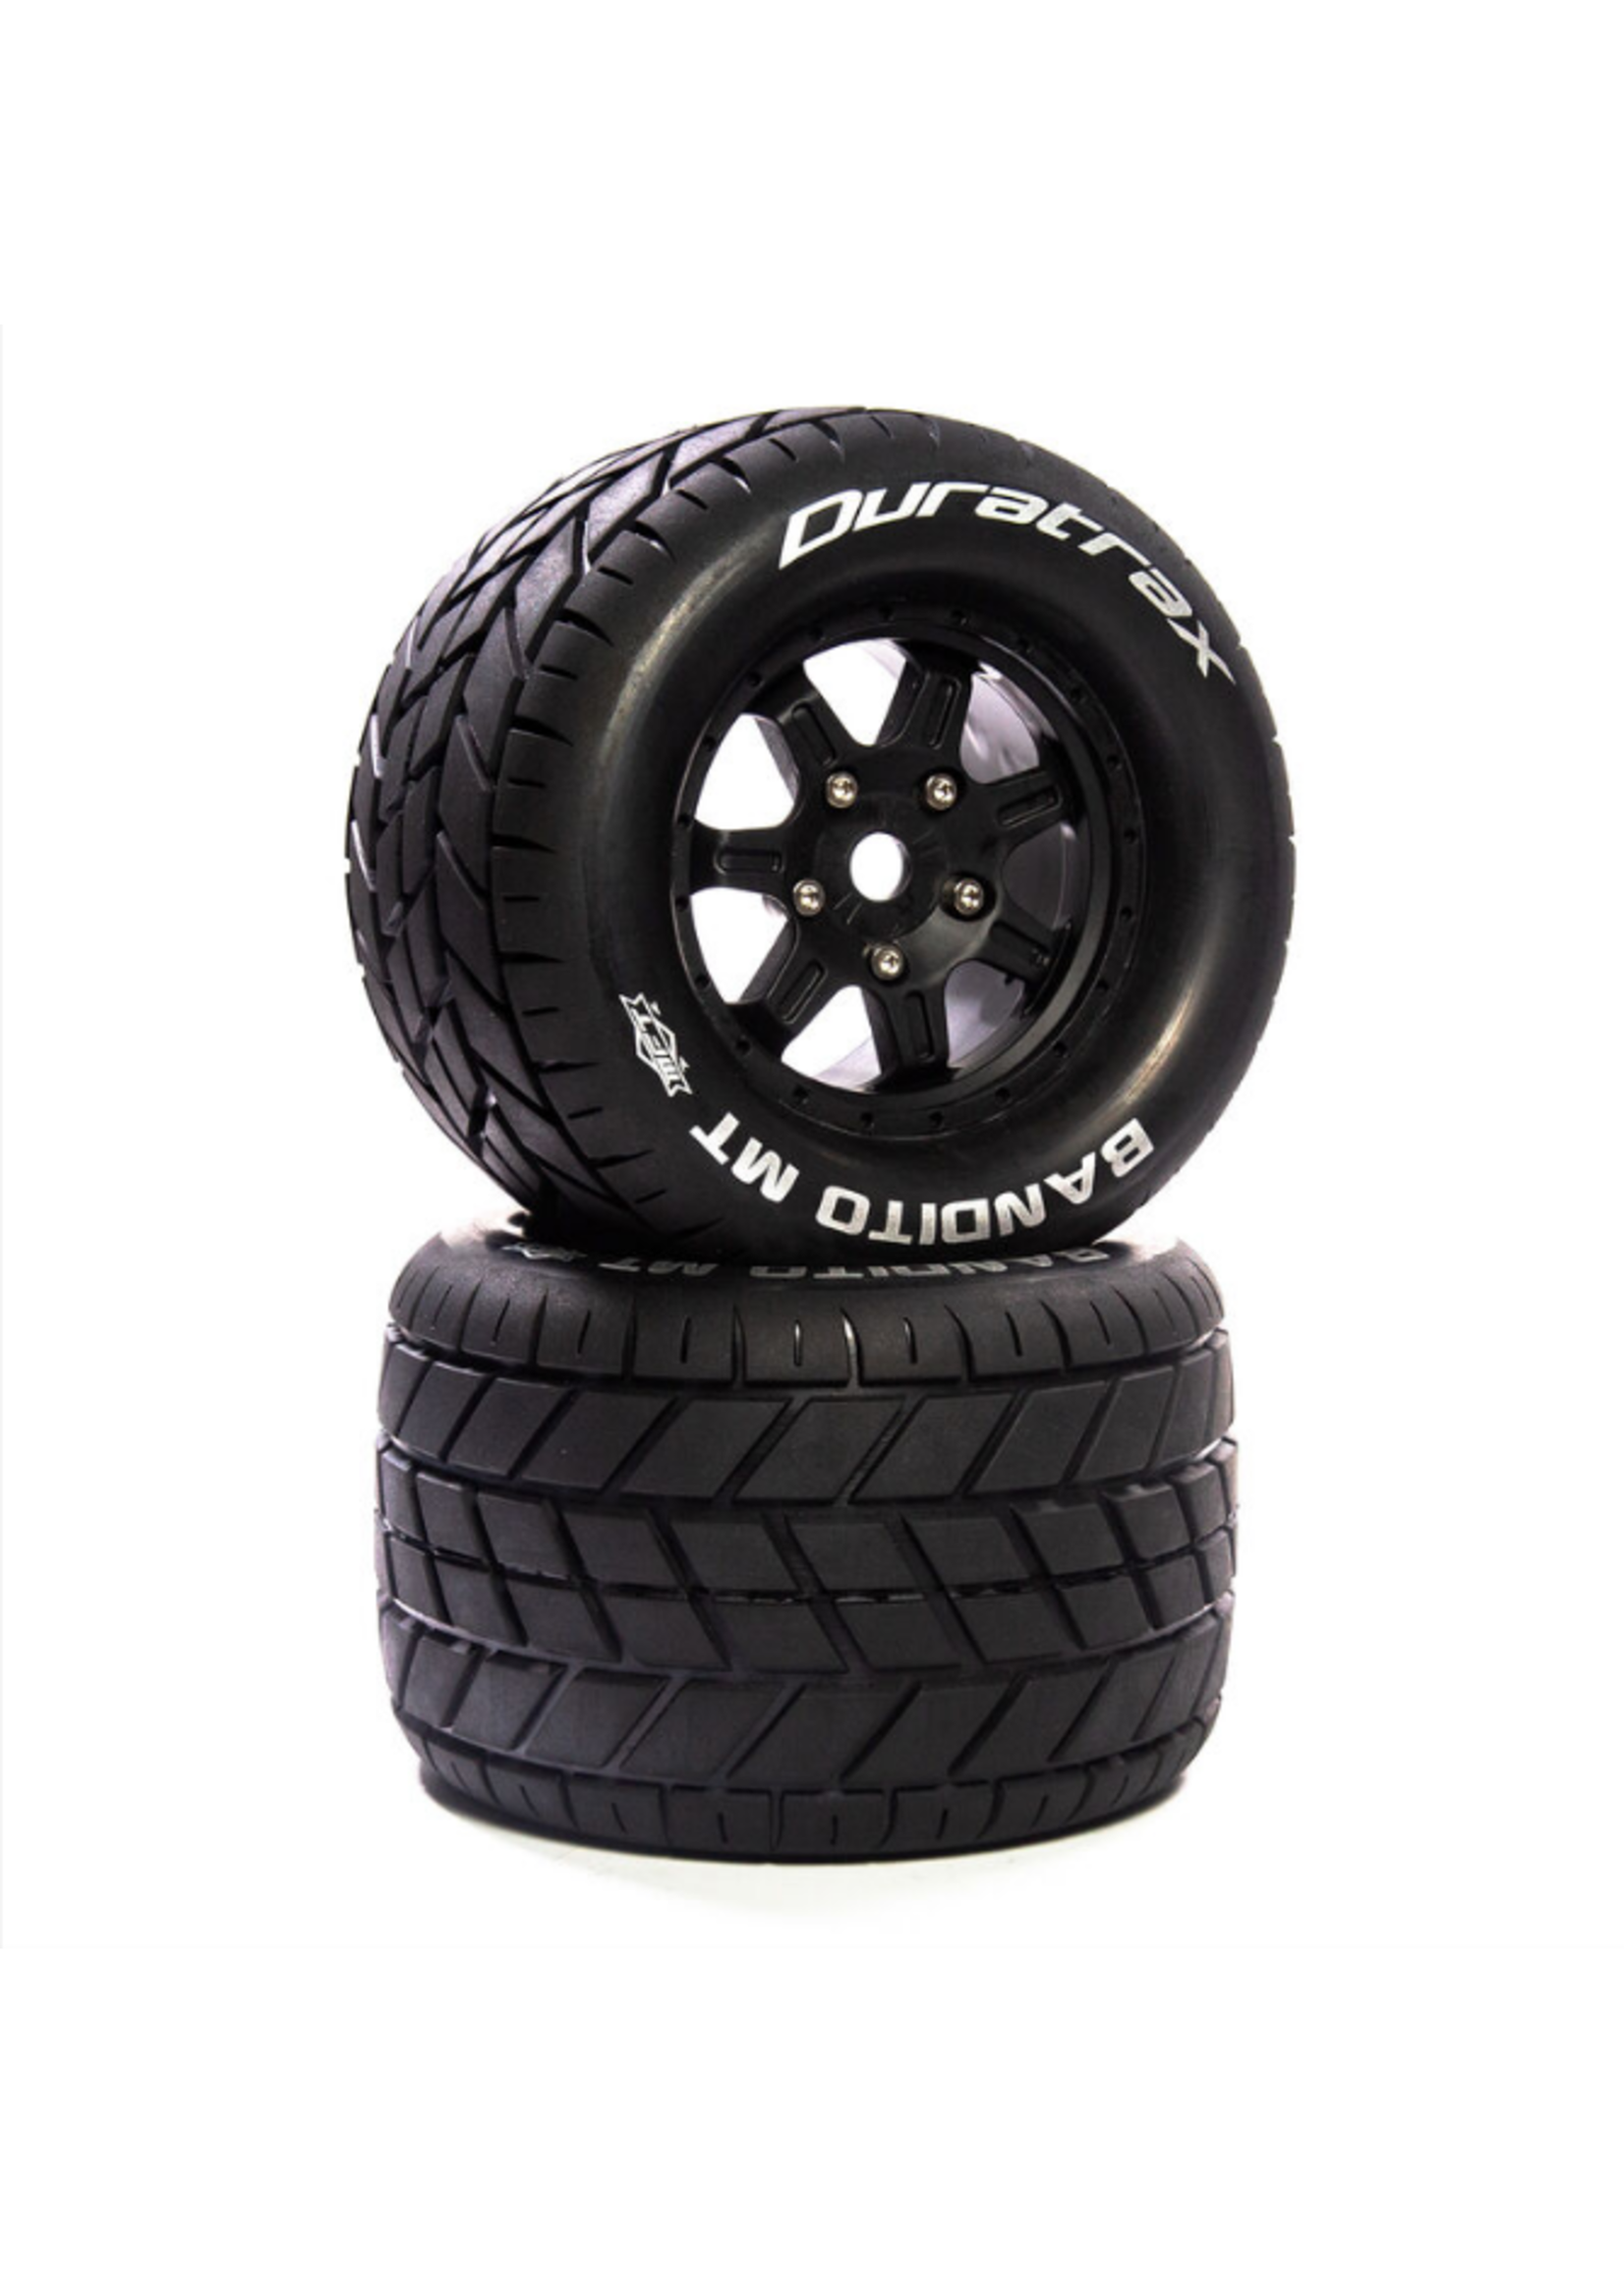 Duratrax DTXC5626 Duratrax Bandito MT Belt 3.8" Mounted Front/Rear Tires 0 Offset 17mm, Black (2)